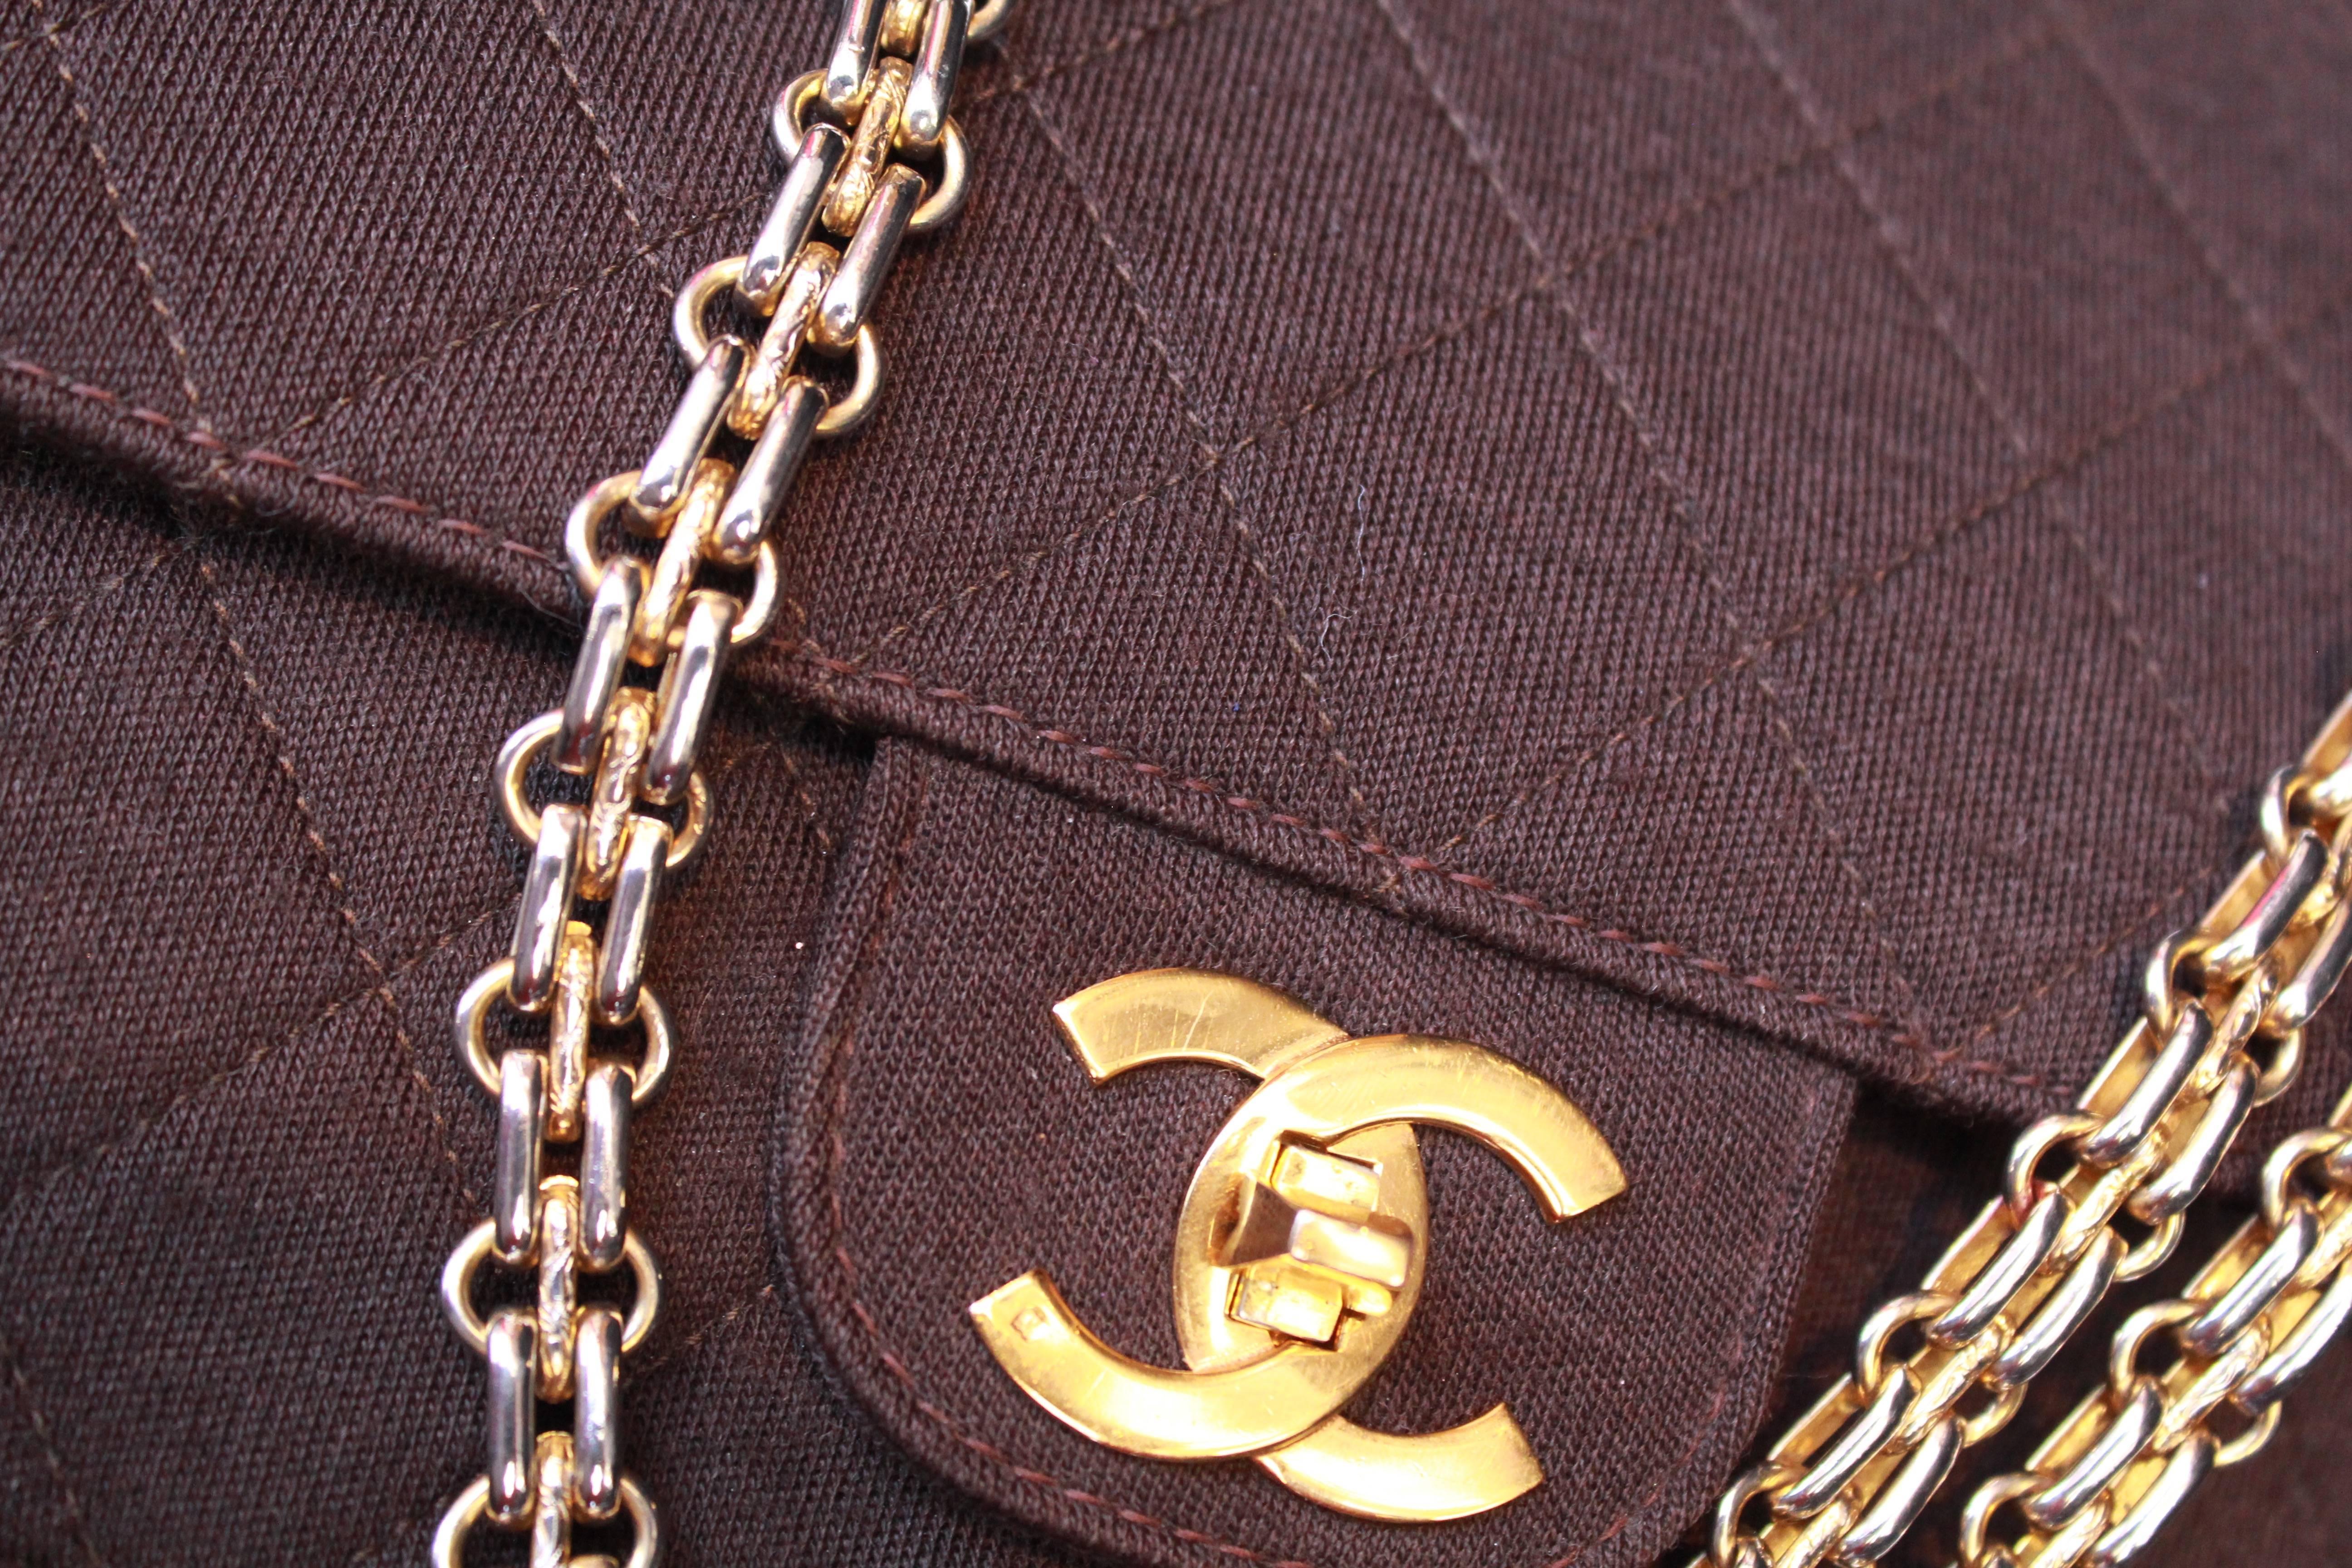 Women's 1970-1980s Chanel “Timeless” brown bag